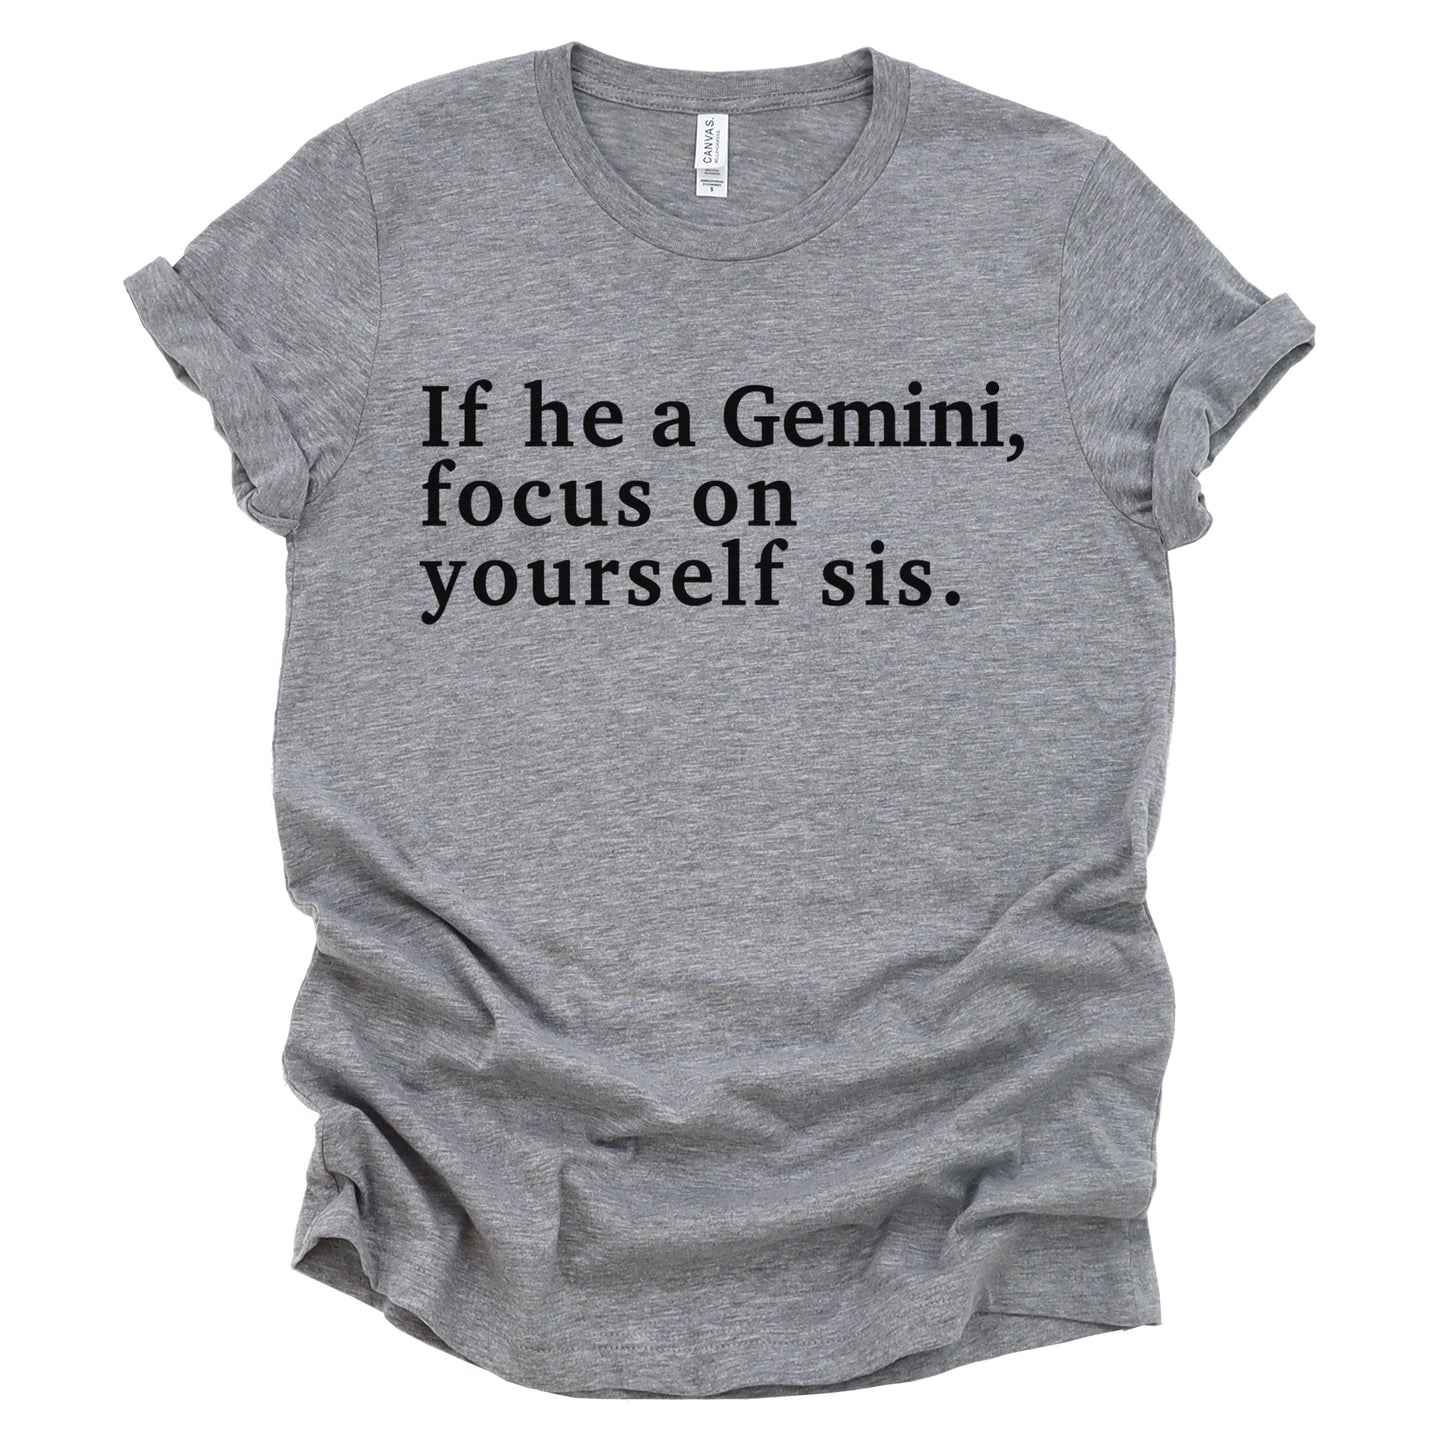 "If He A Gemini, Focus On Yourself Sis" Tee